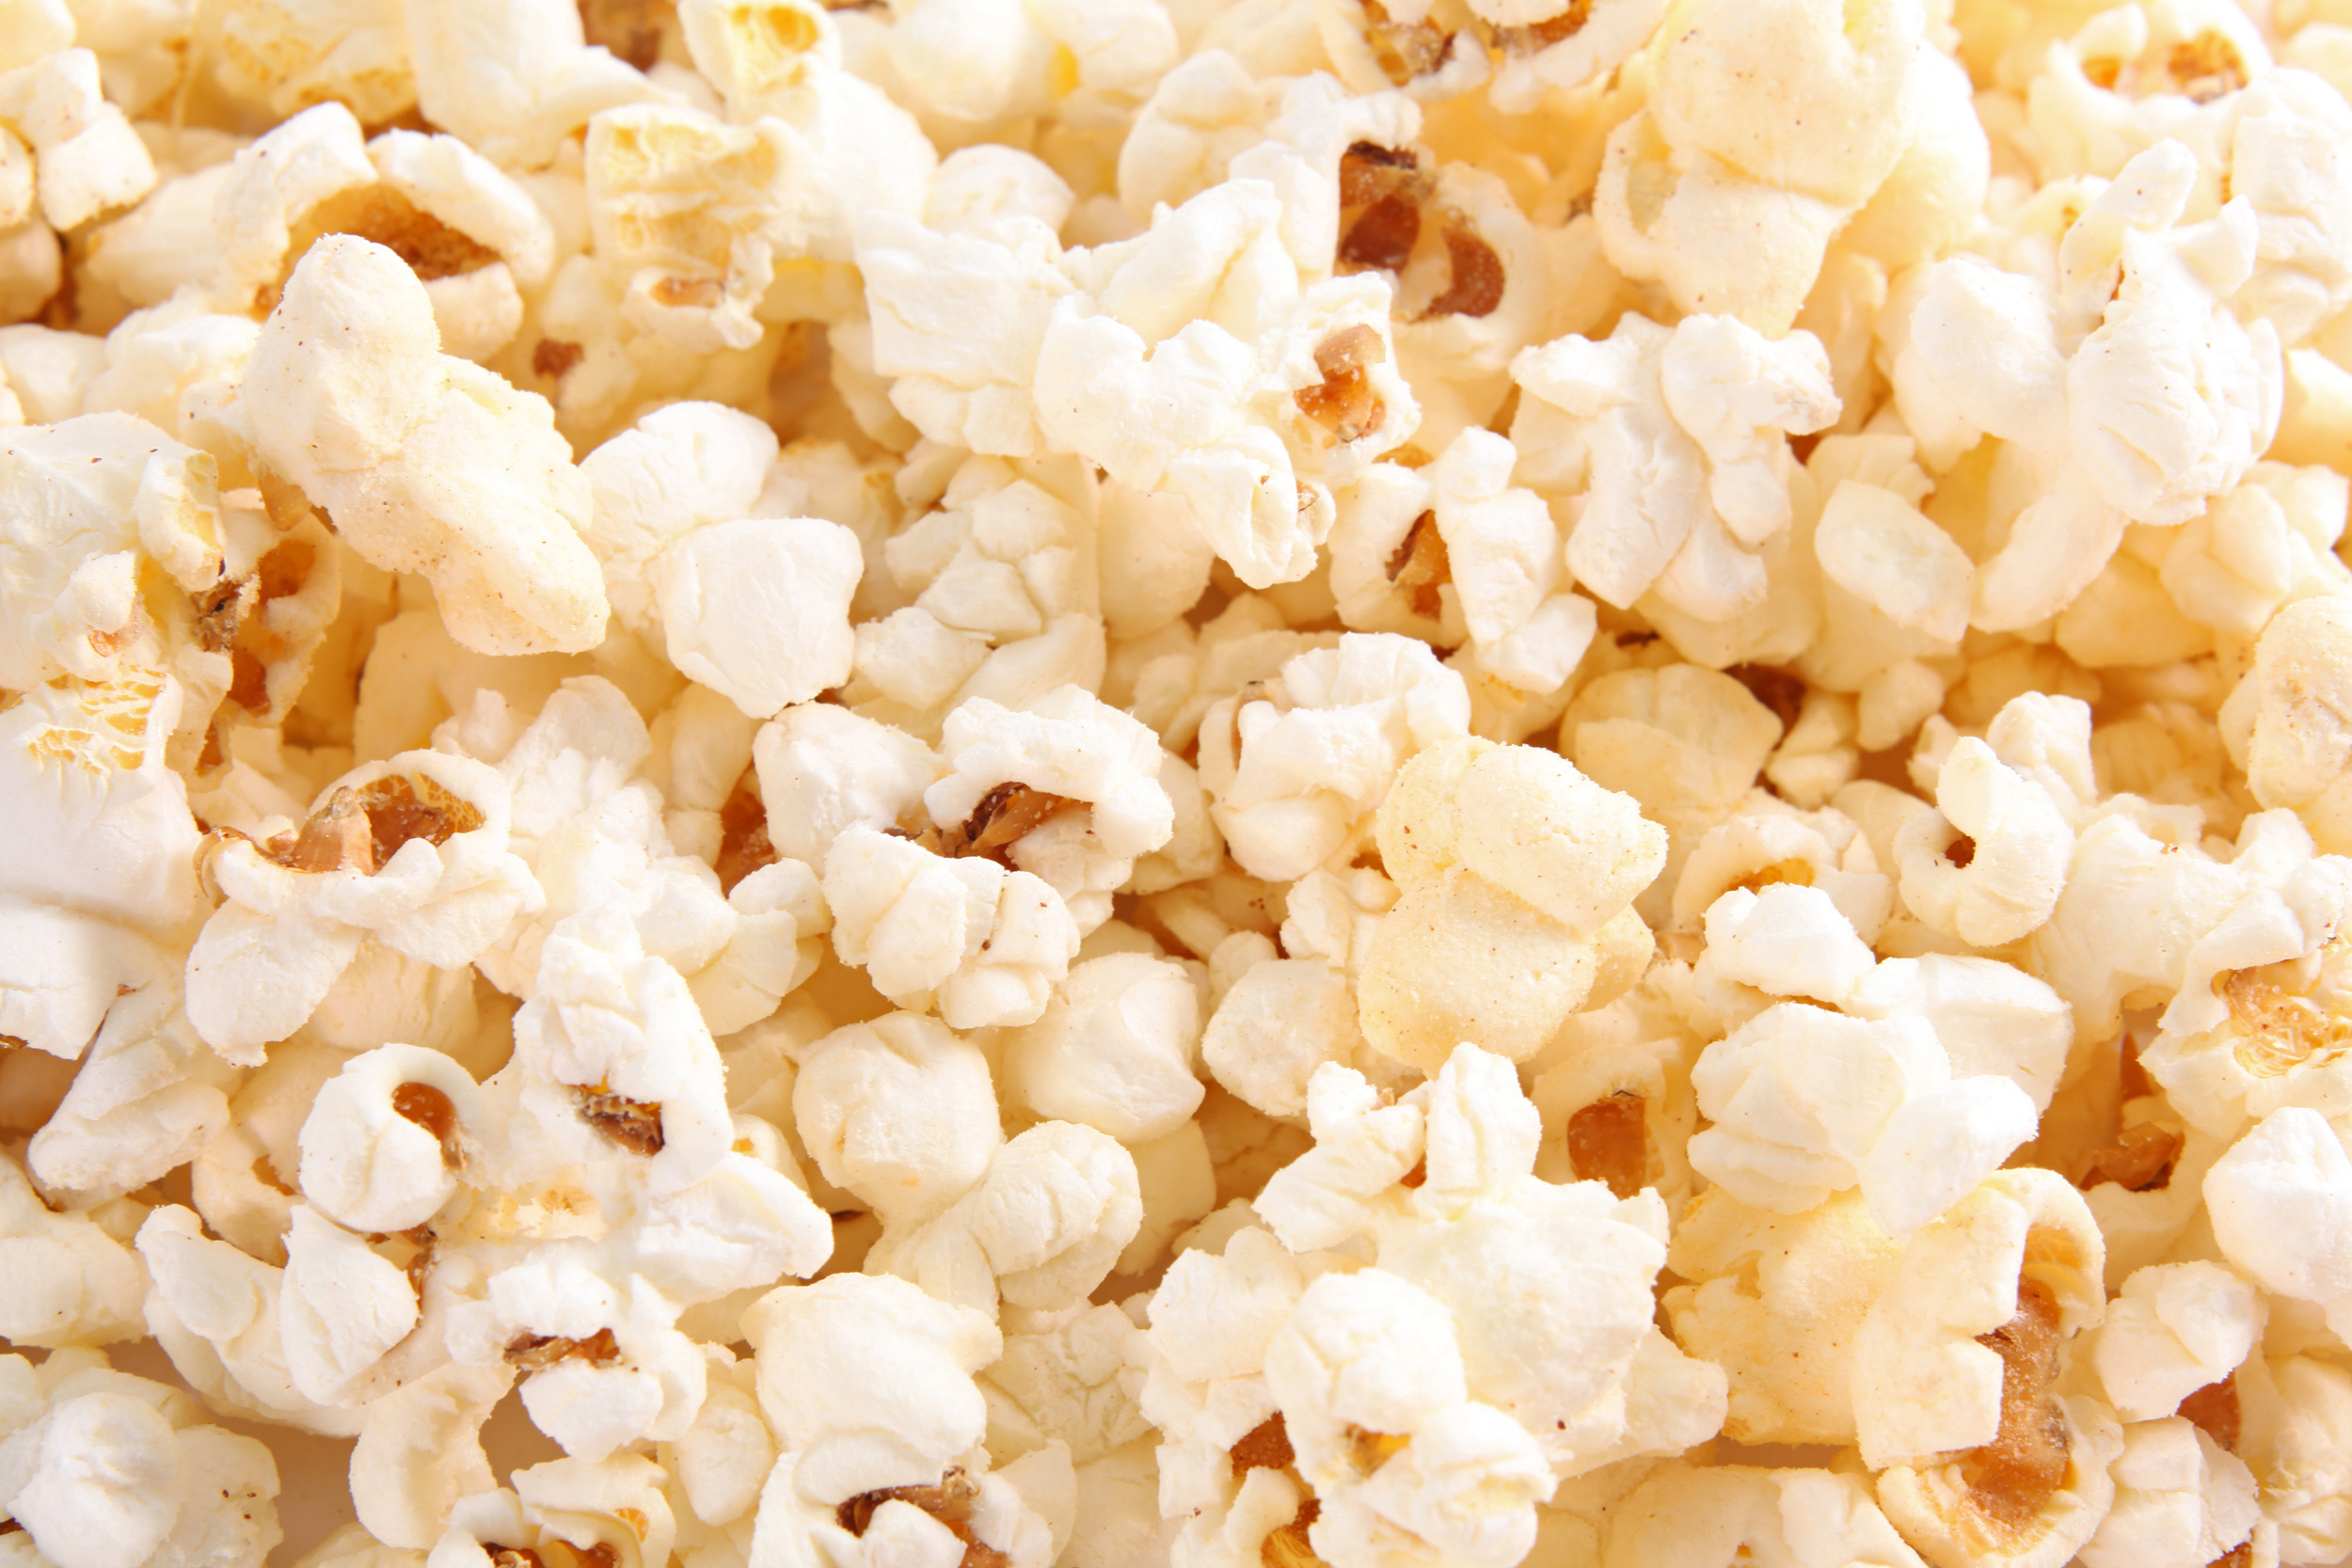 Popcorn indulgence, HD wallpaper, Tempting treat, Movie night delight, 2500x1670 HD Desktop